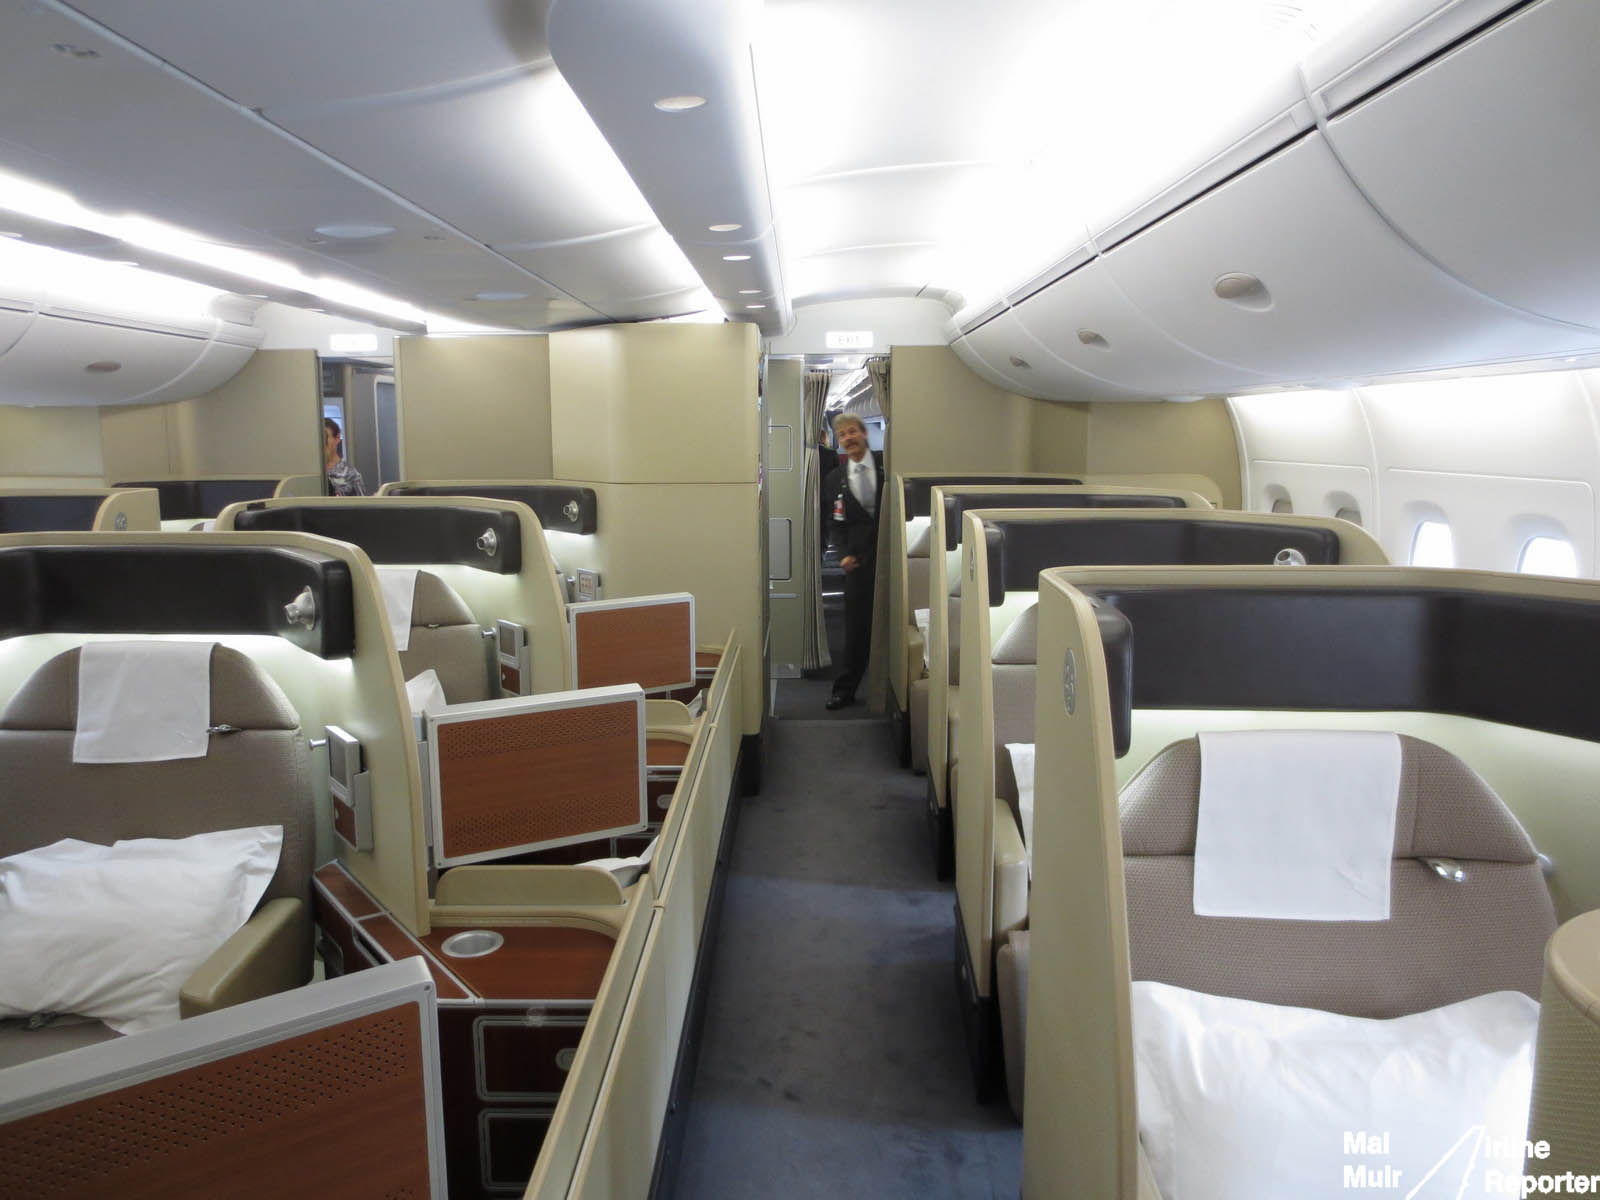 Flying A Dream Qantas First Class On An Airbus A380 Part 2